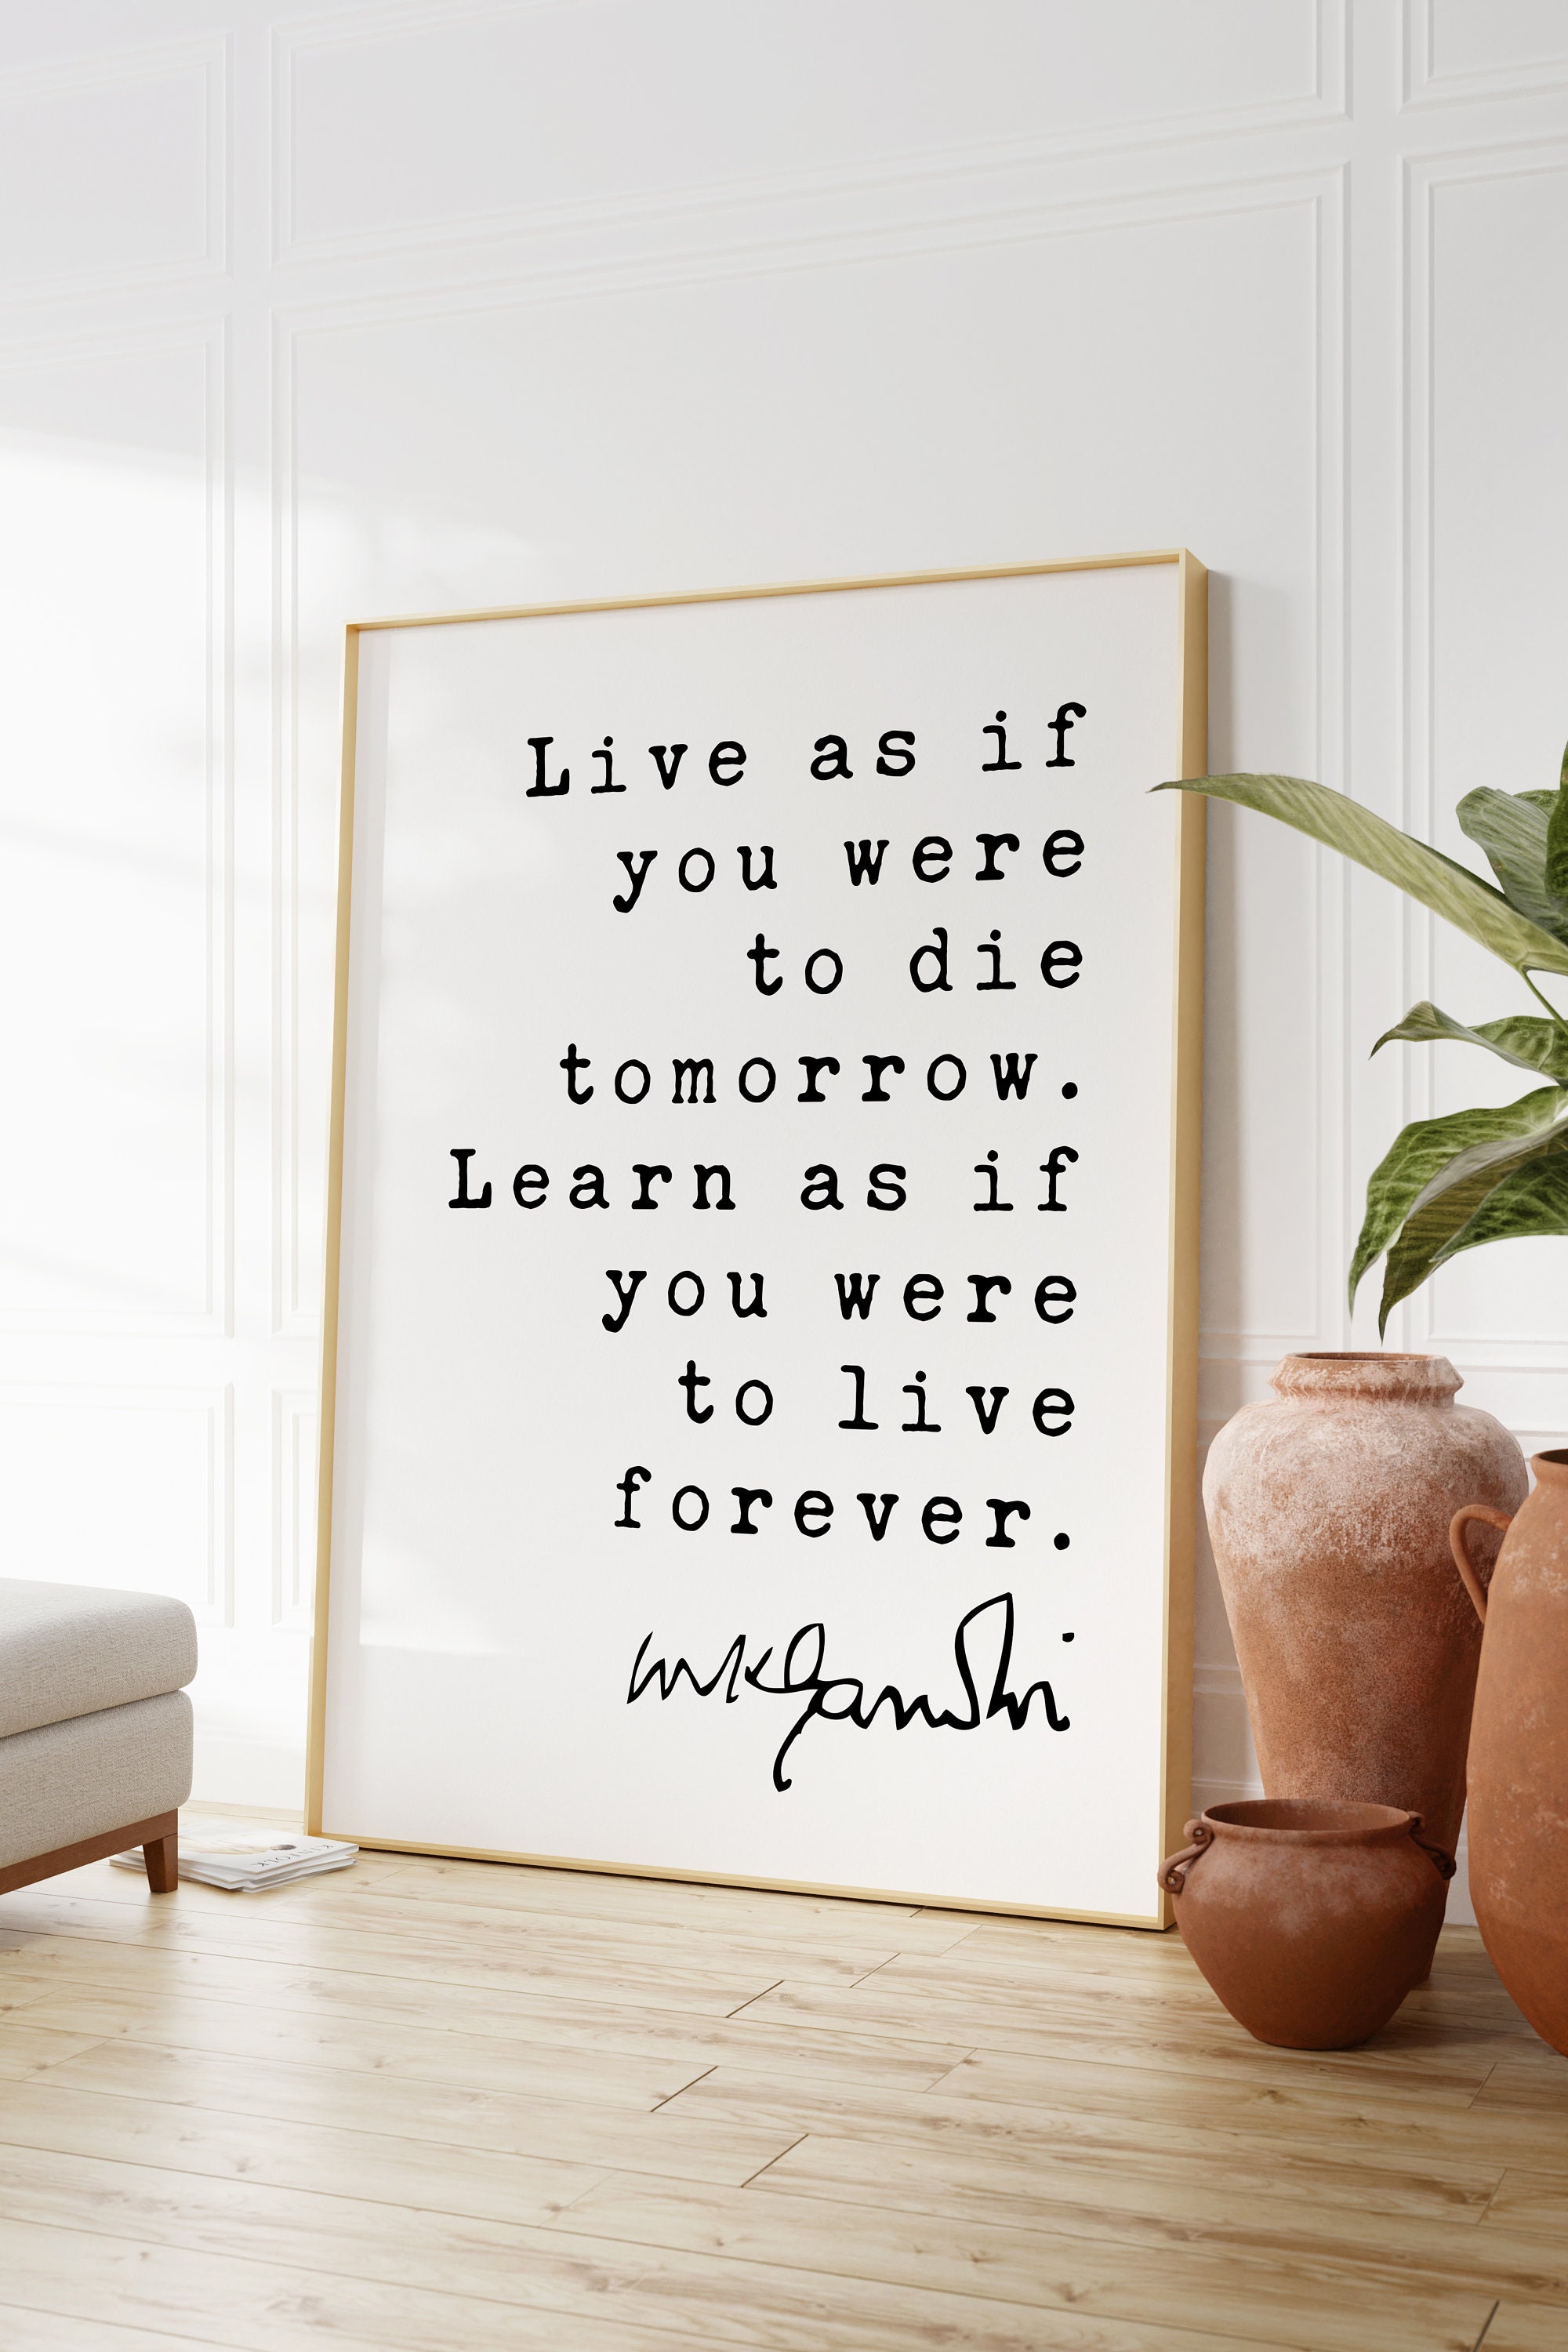 Live as if you were to die Mahatma Gandhi - Pensador